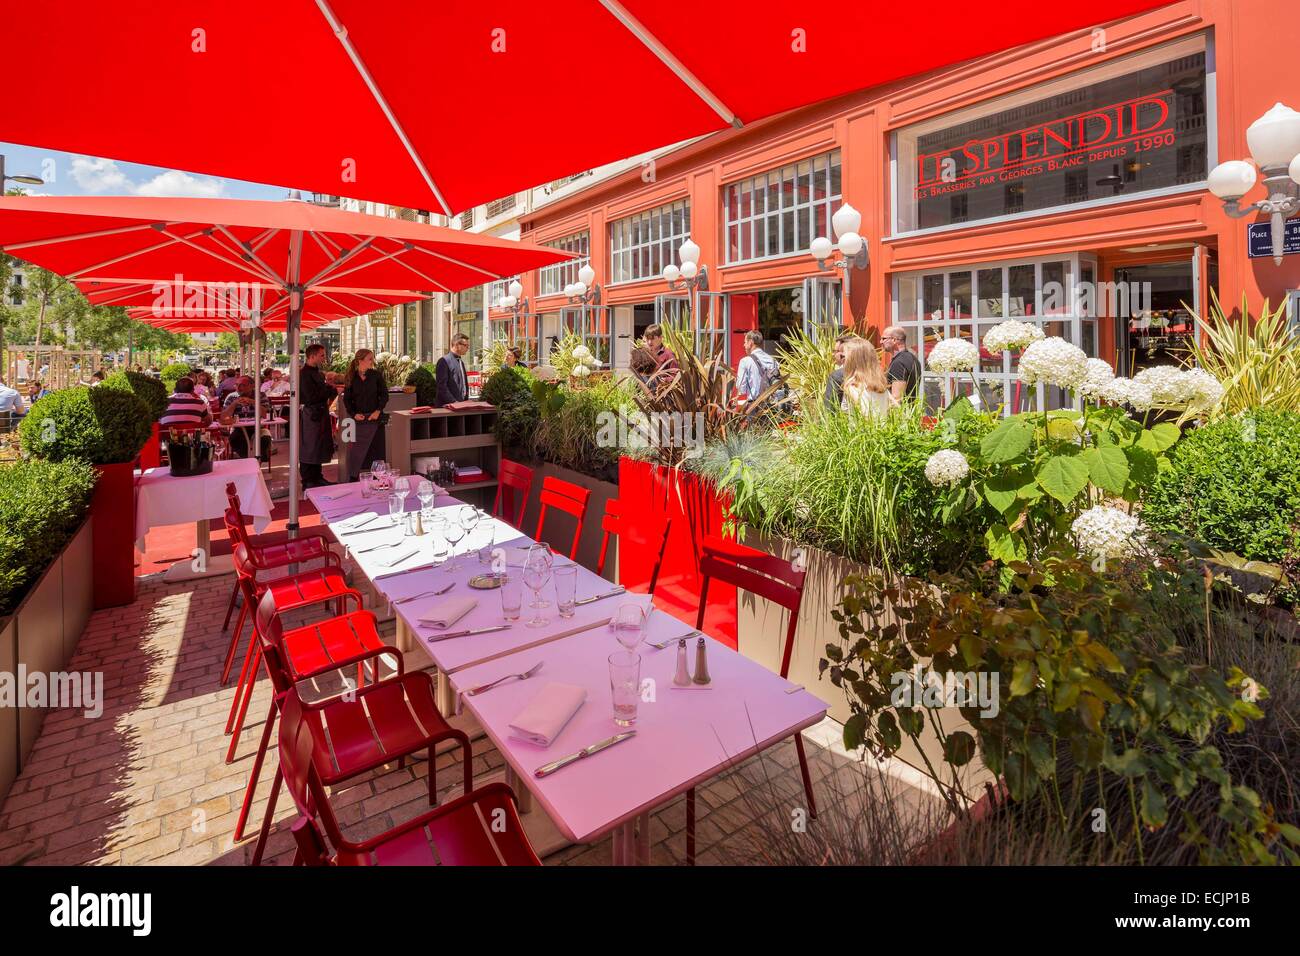 Francia, Ródano, Lyon, Brasserie Le Splendid, Jules Ferry plaza Foto de stock